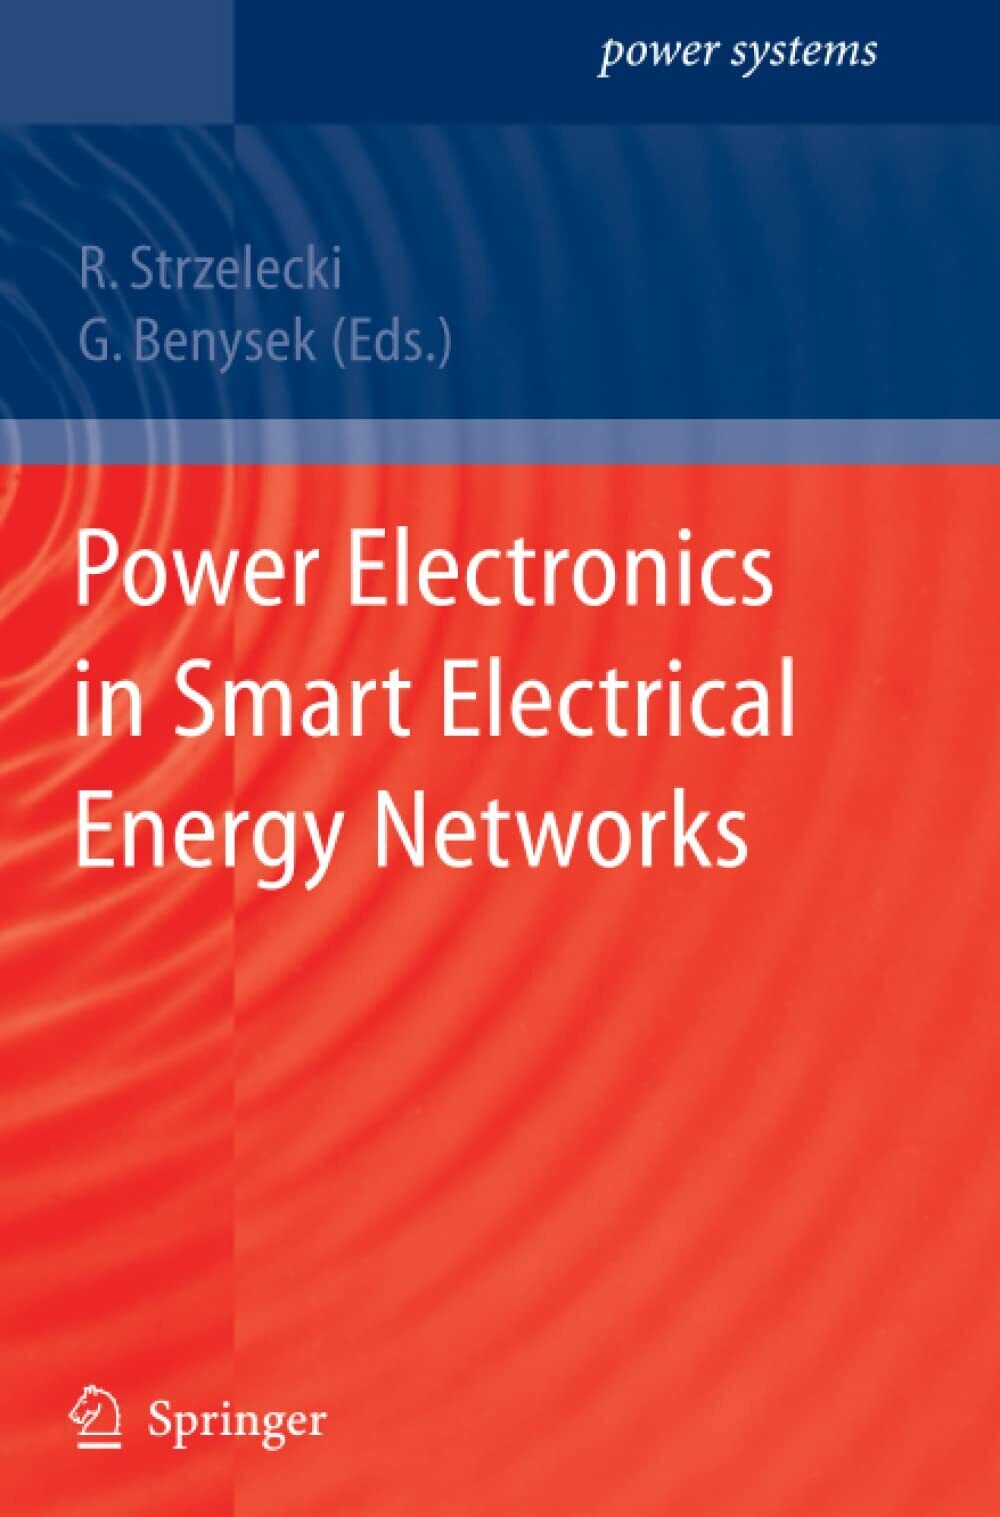 Power Electronics in Smart Electrical Energy Networks - R. Strzelecki - 2010